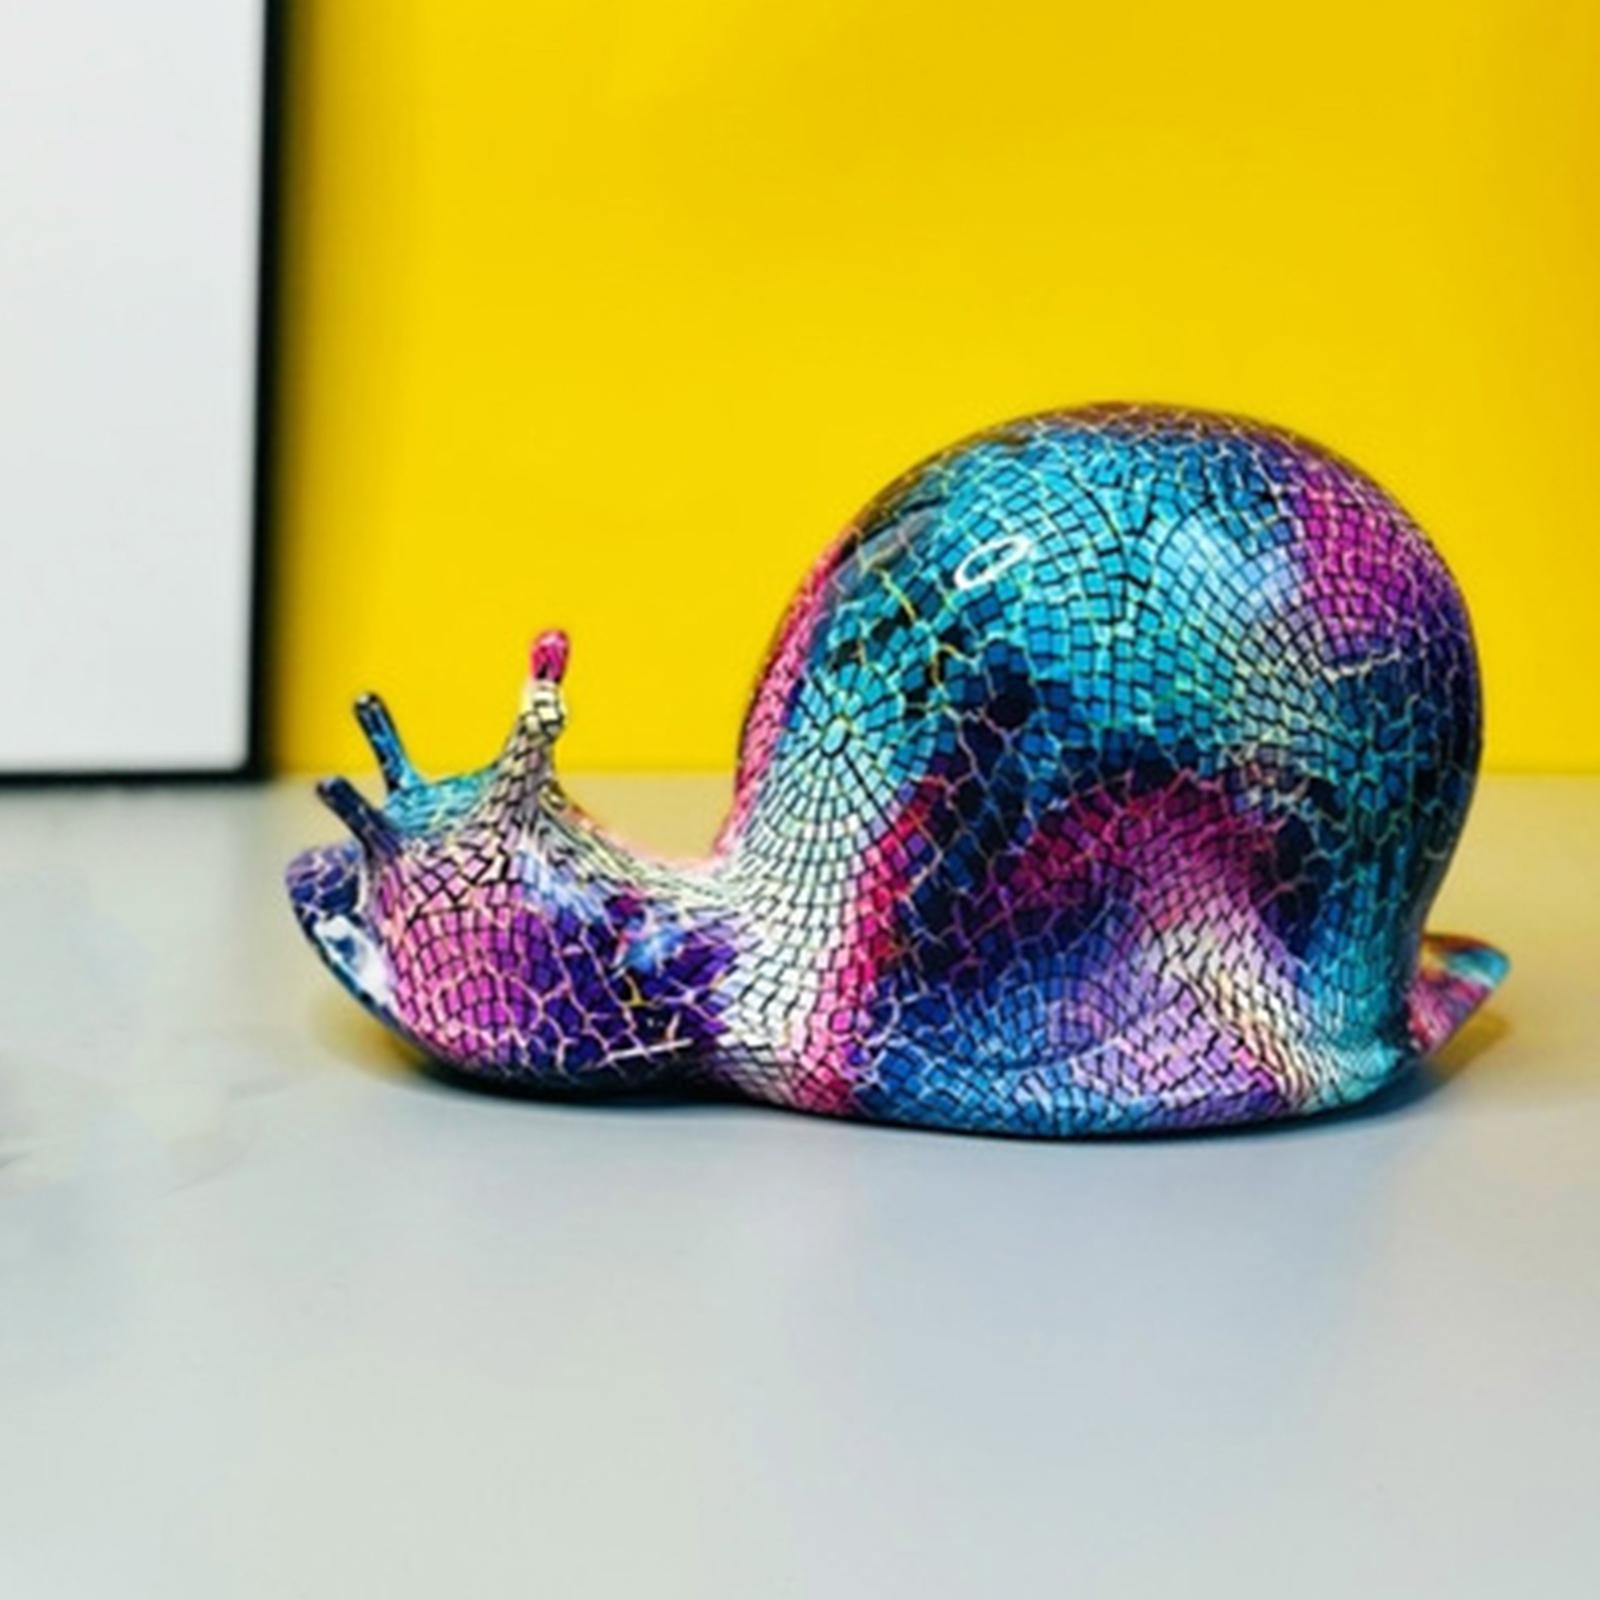 Snails Sculpture Artwork Ornament Animals Statue for Home Living Room Office blue